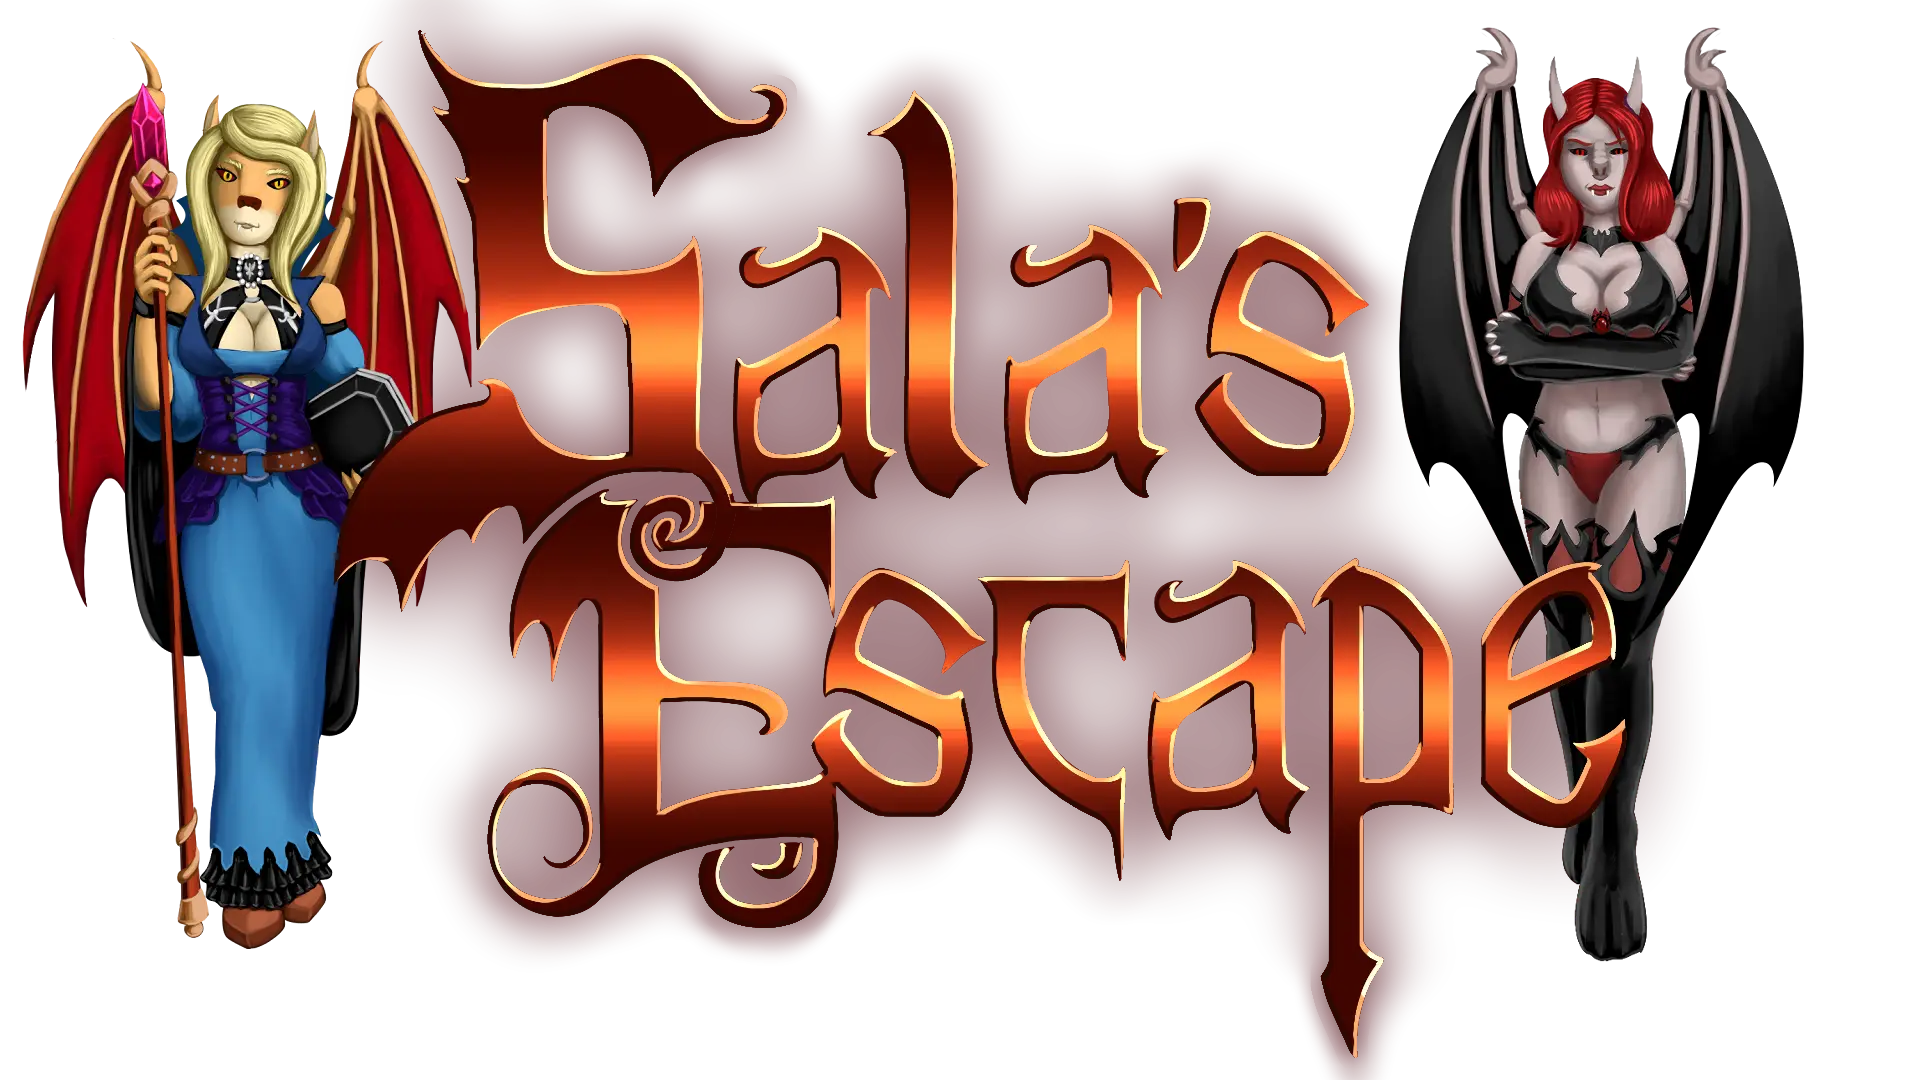 Sala's Escape main image